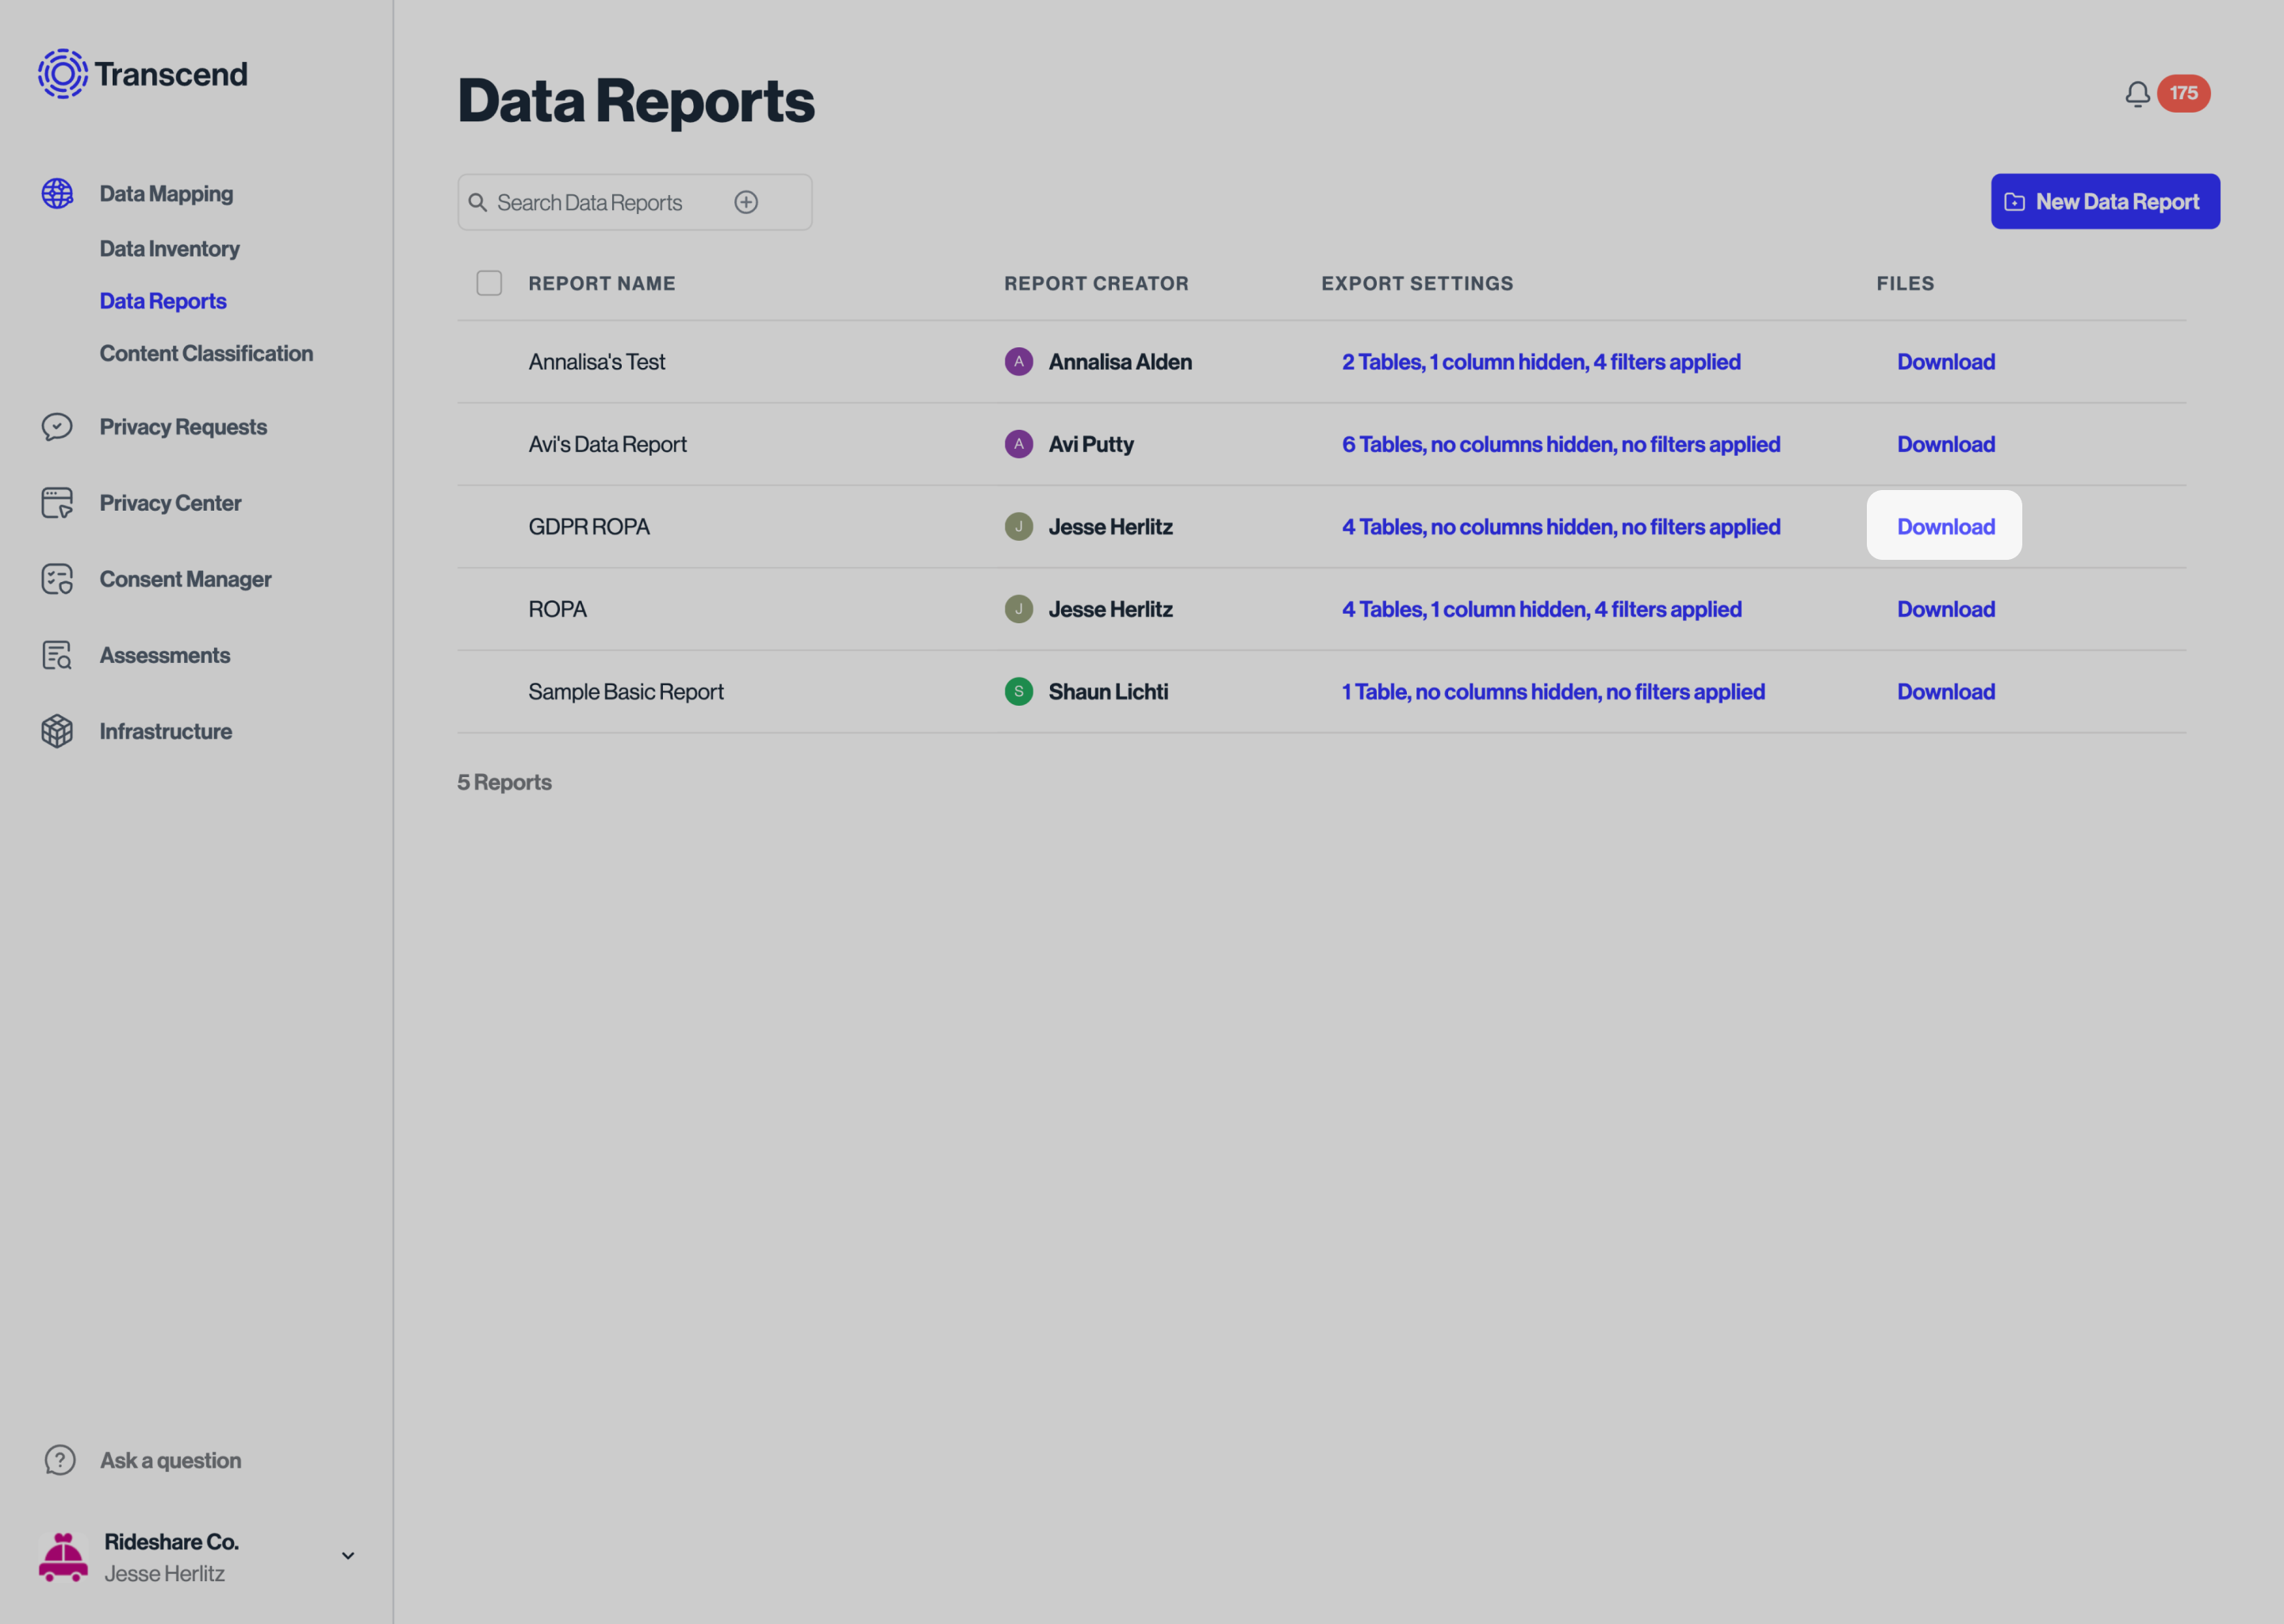 Redownloading a Data Report